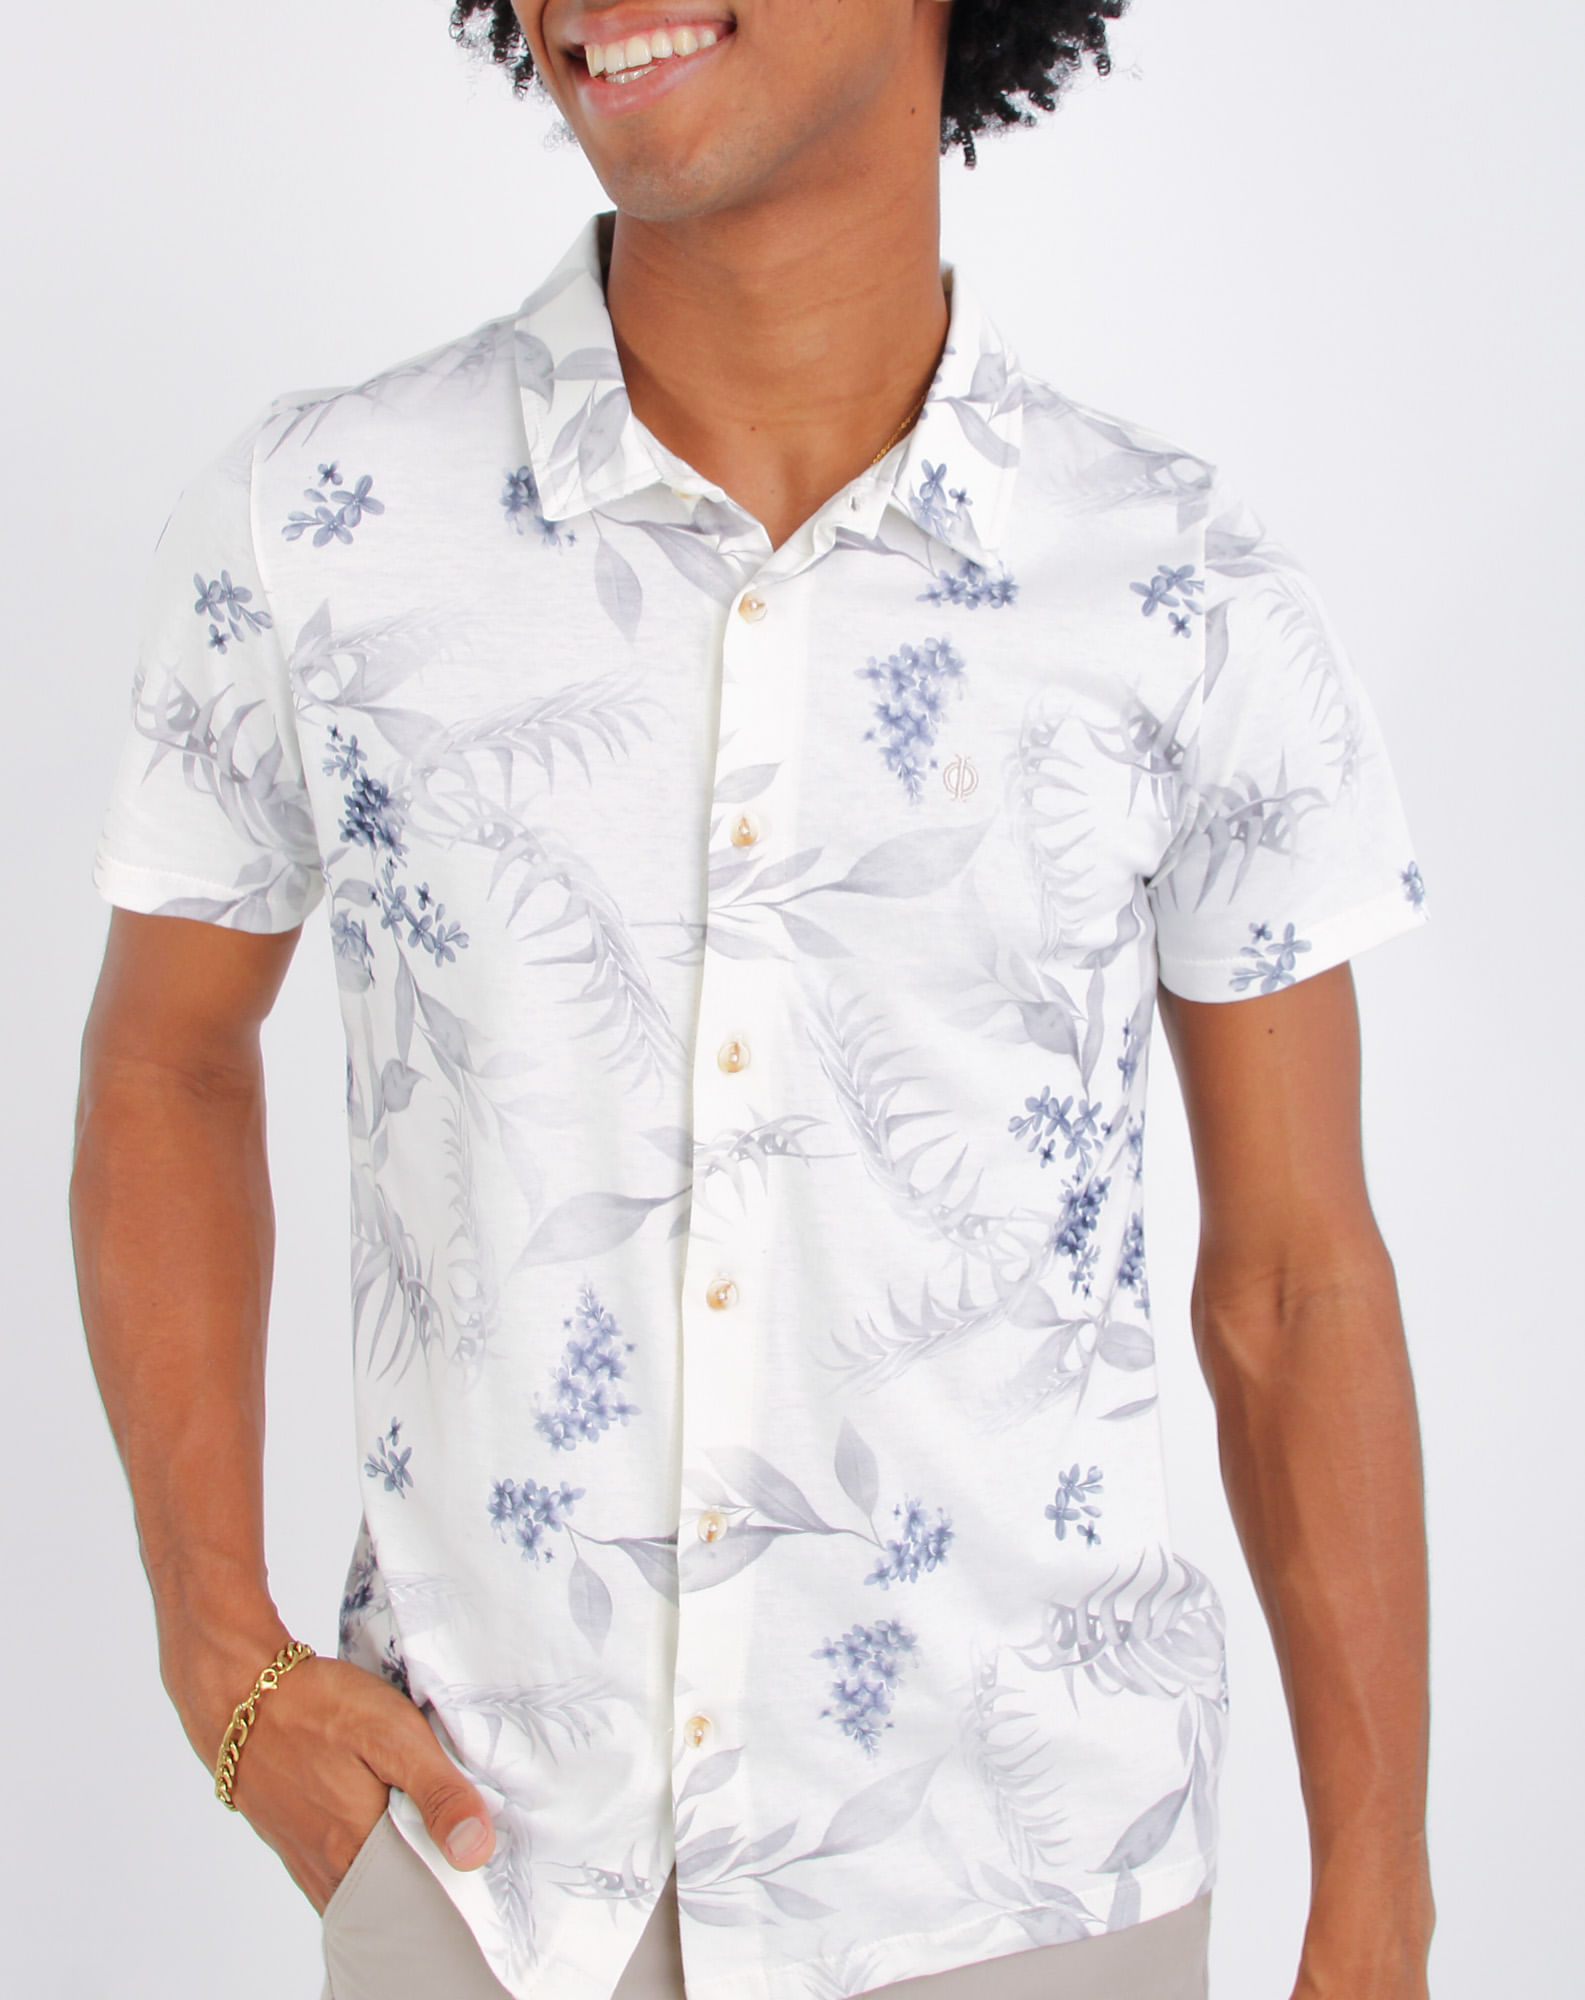 684711001 camisa manga curta masculina estampa folhas off white p 95b